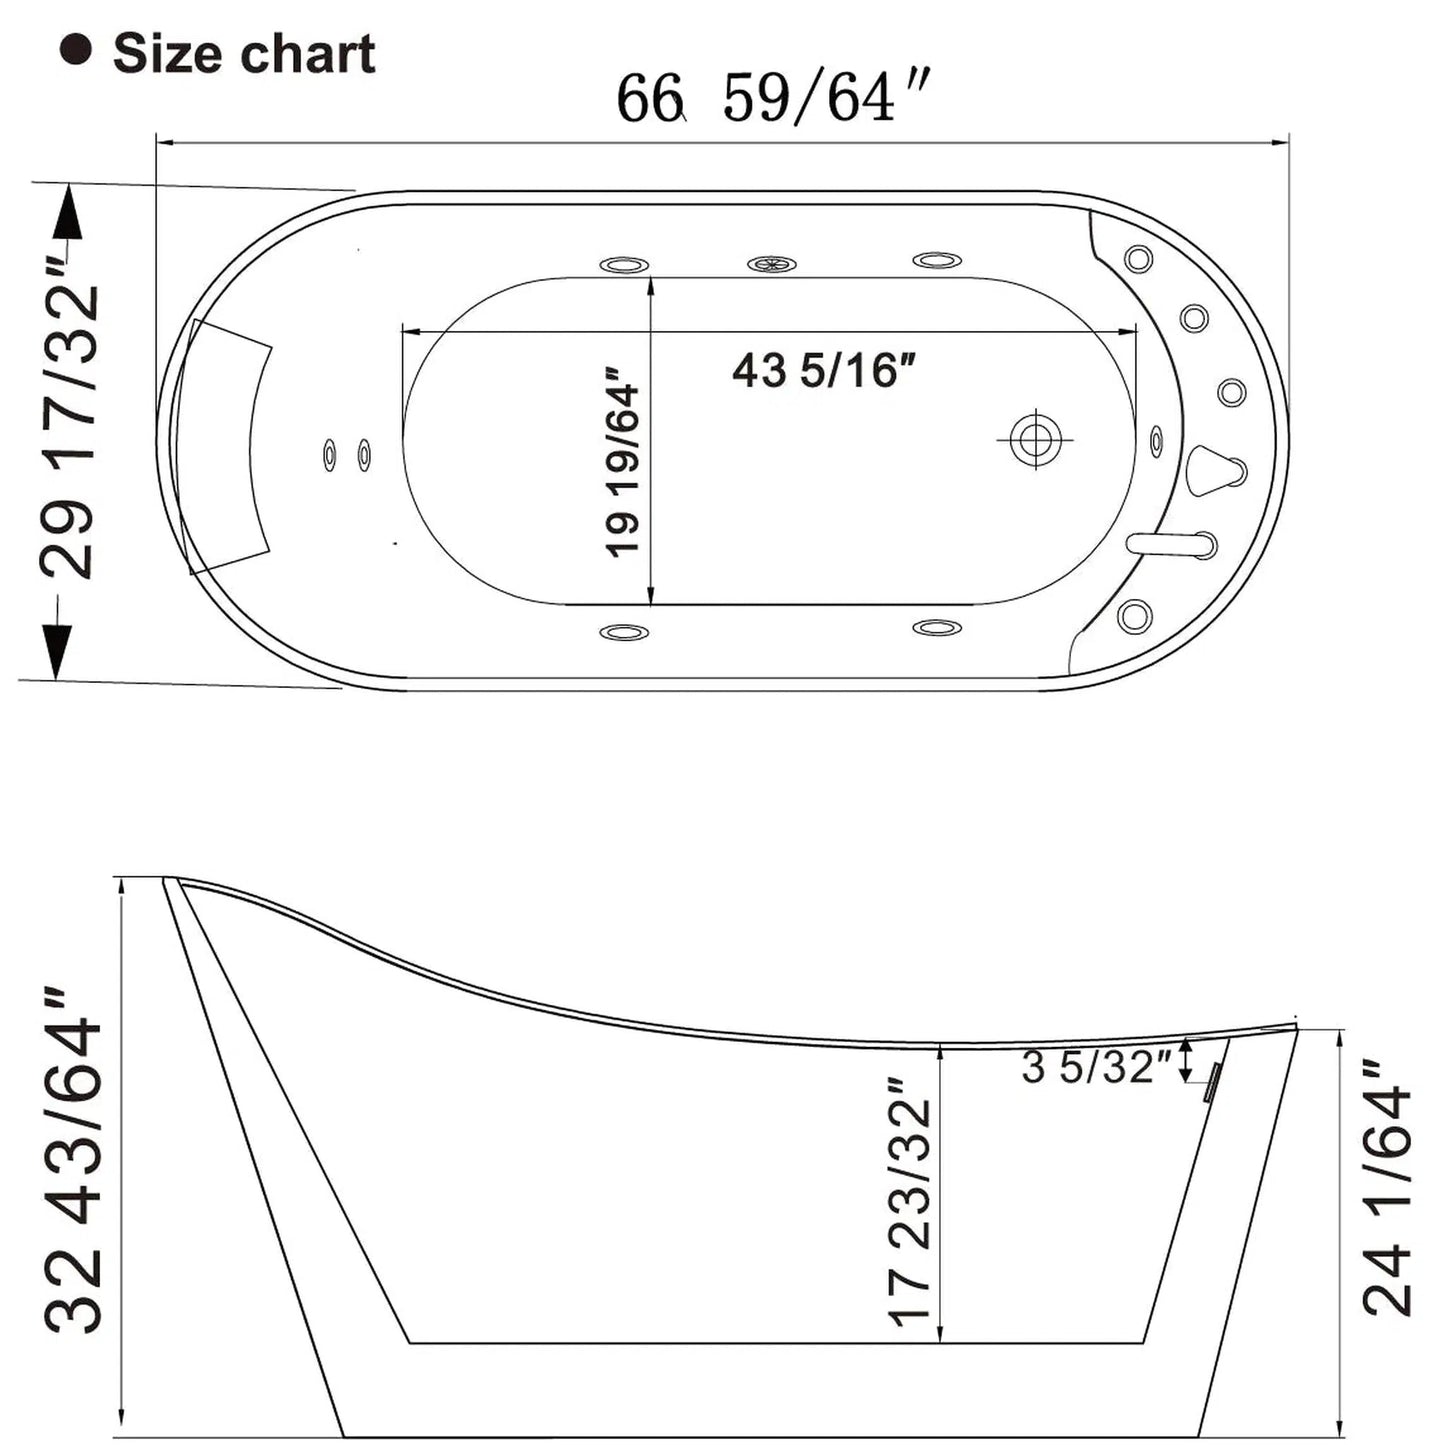 Empava 67" White Freestanding Oval Whirlpool Bathtub - 67AIS09